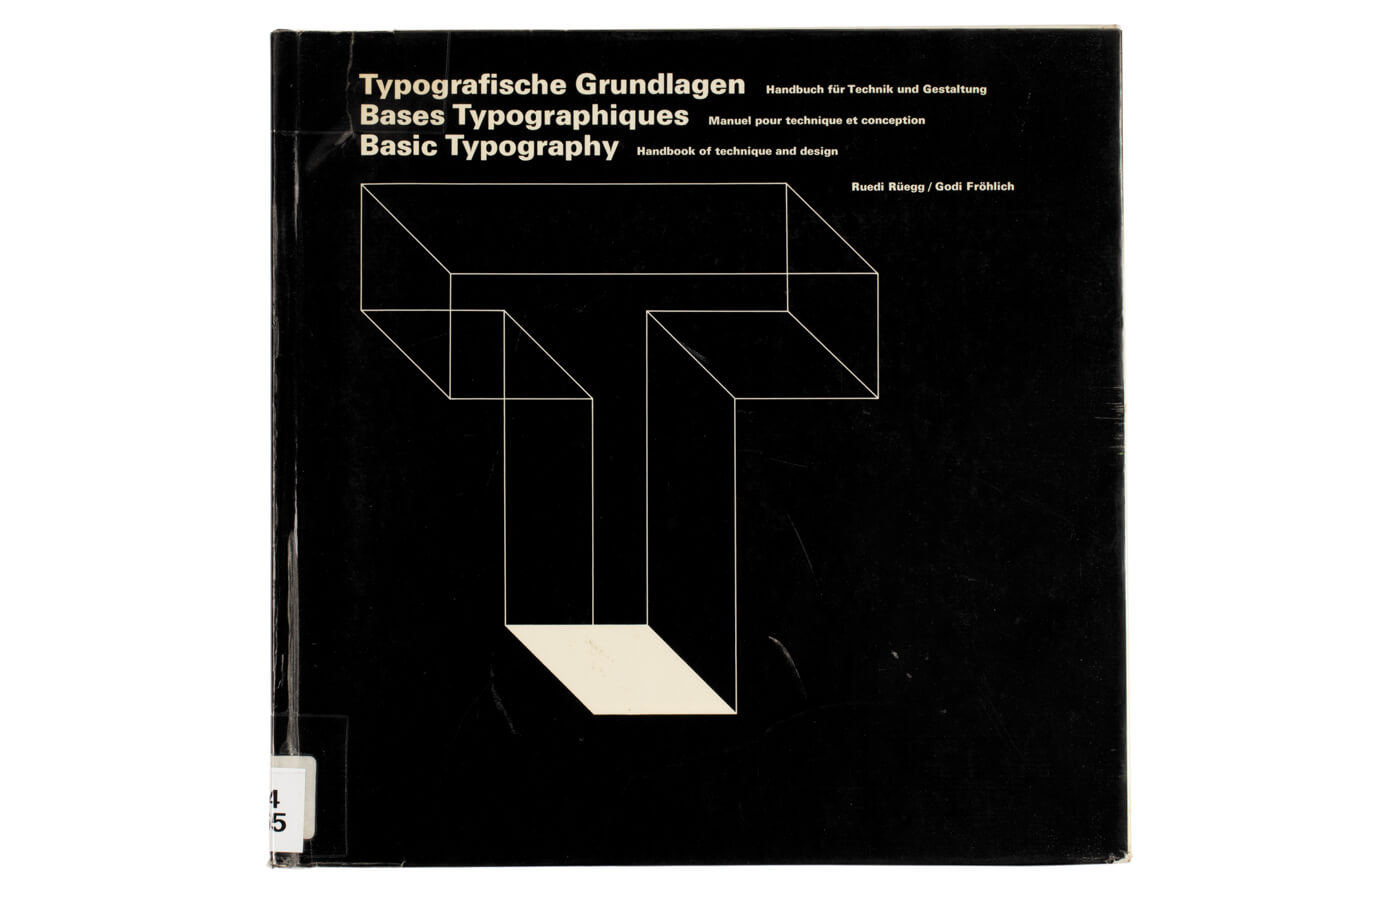 Typografiches Grundlagen | Bases Typographiques | Basic Typography